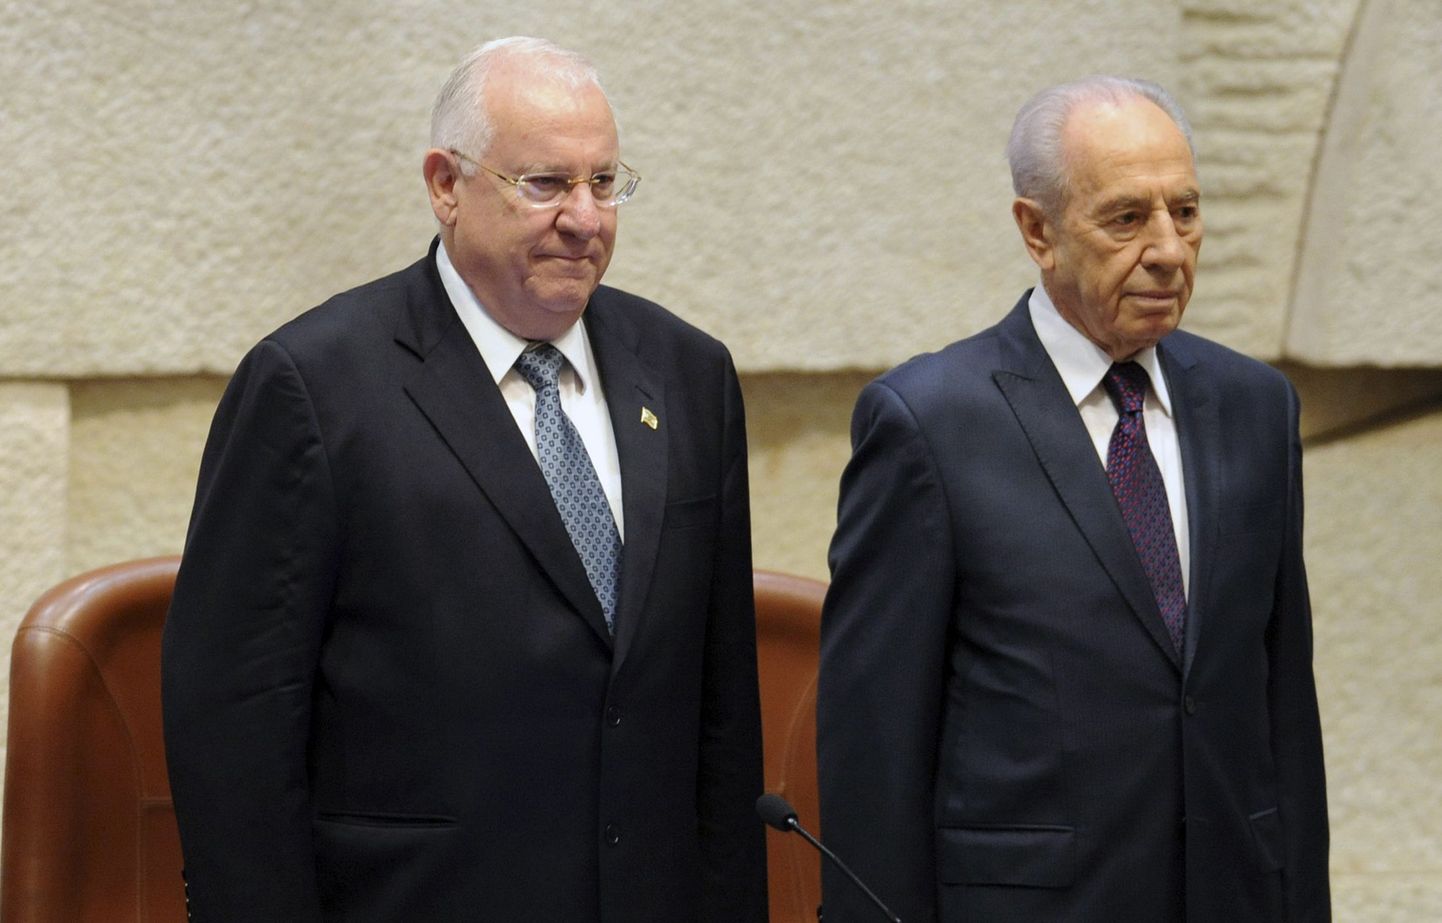 Uus Iisraeli president Reuven Rivlin seisab kõrvuti praeguse presidendi Shimon Peresiga.